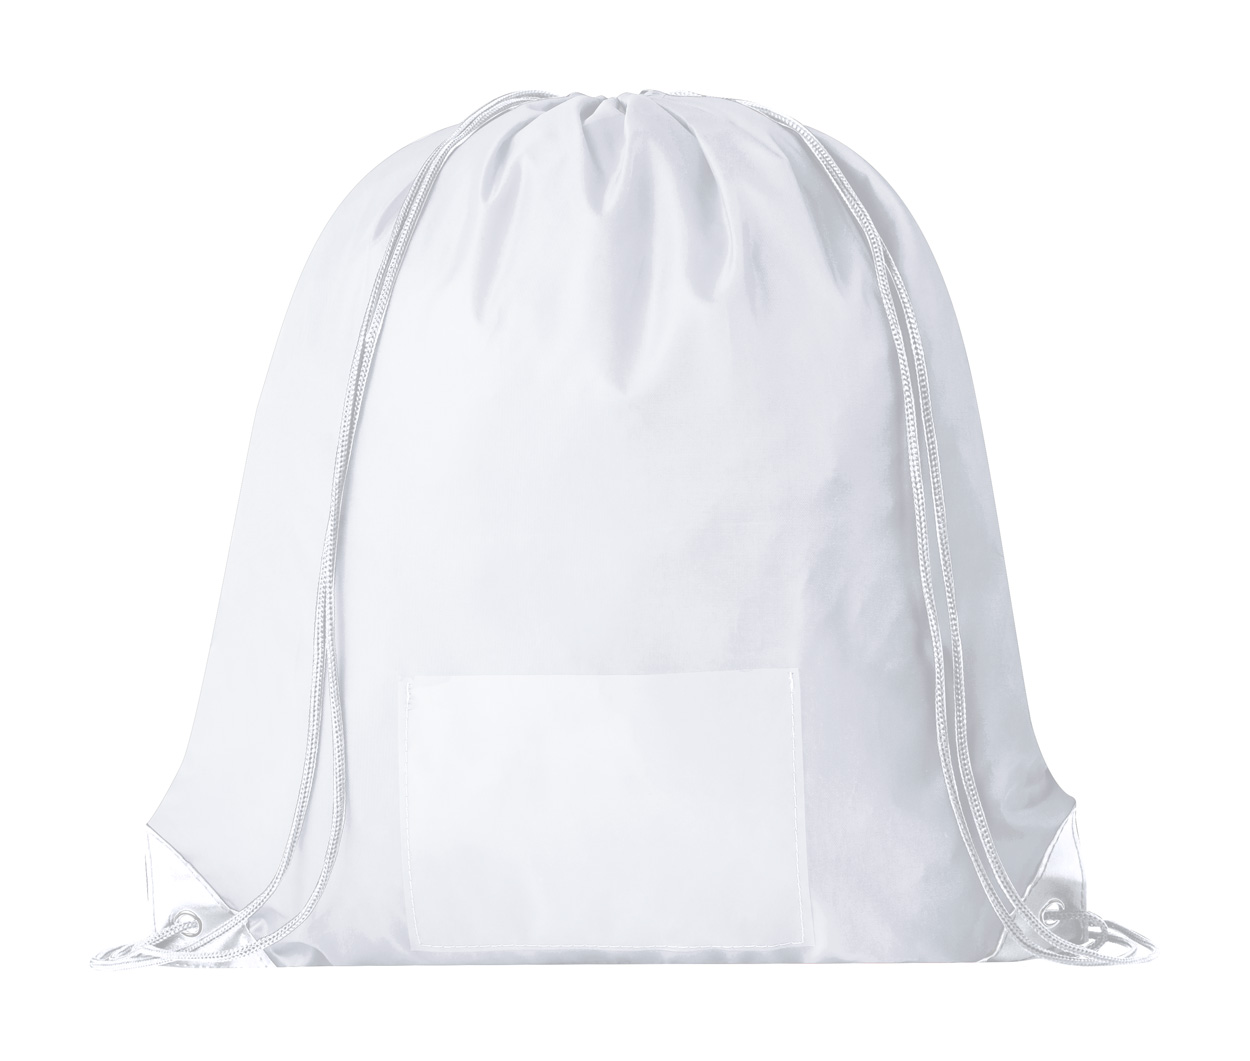 Selasi bag for download - white